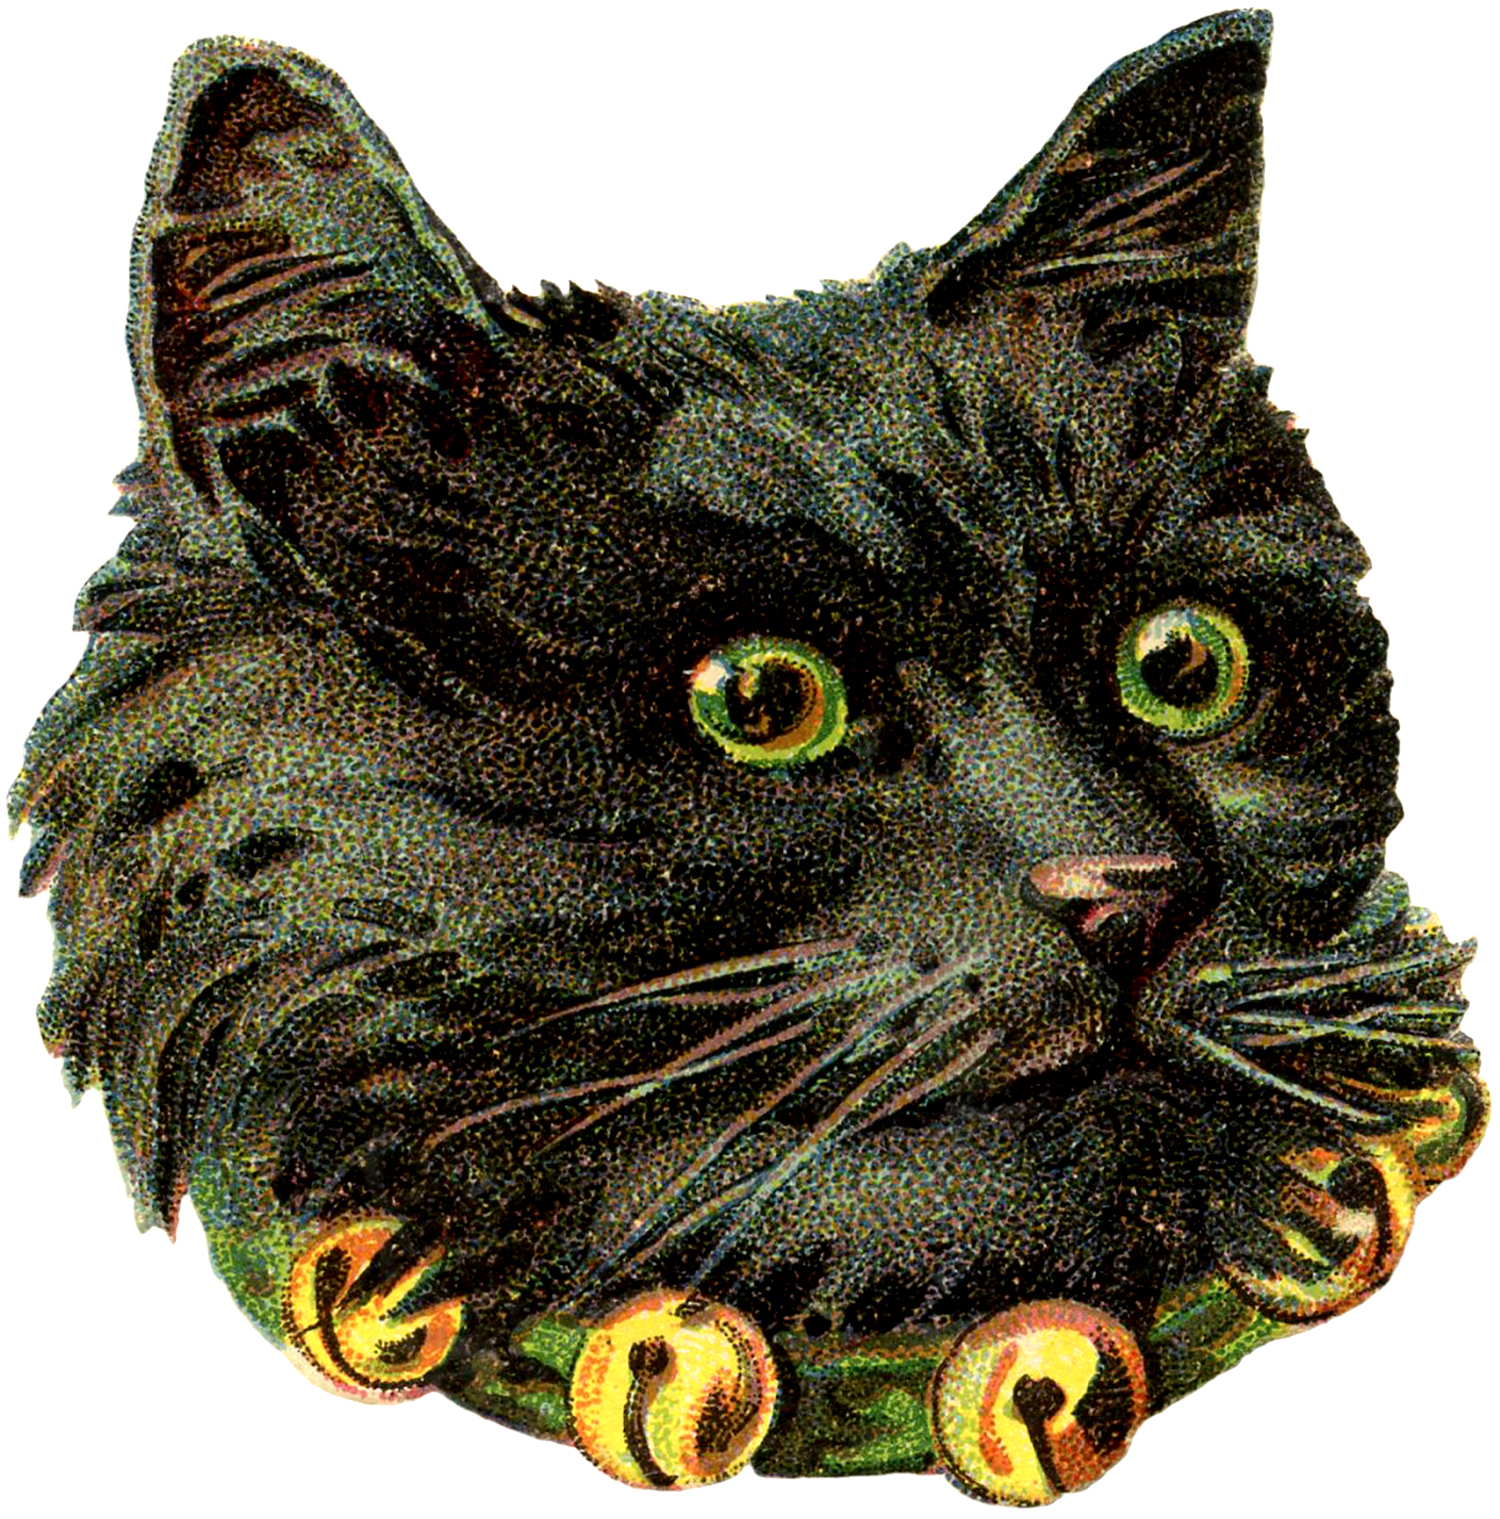 Free Black Cat Image - The Graphics Fairy